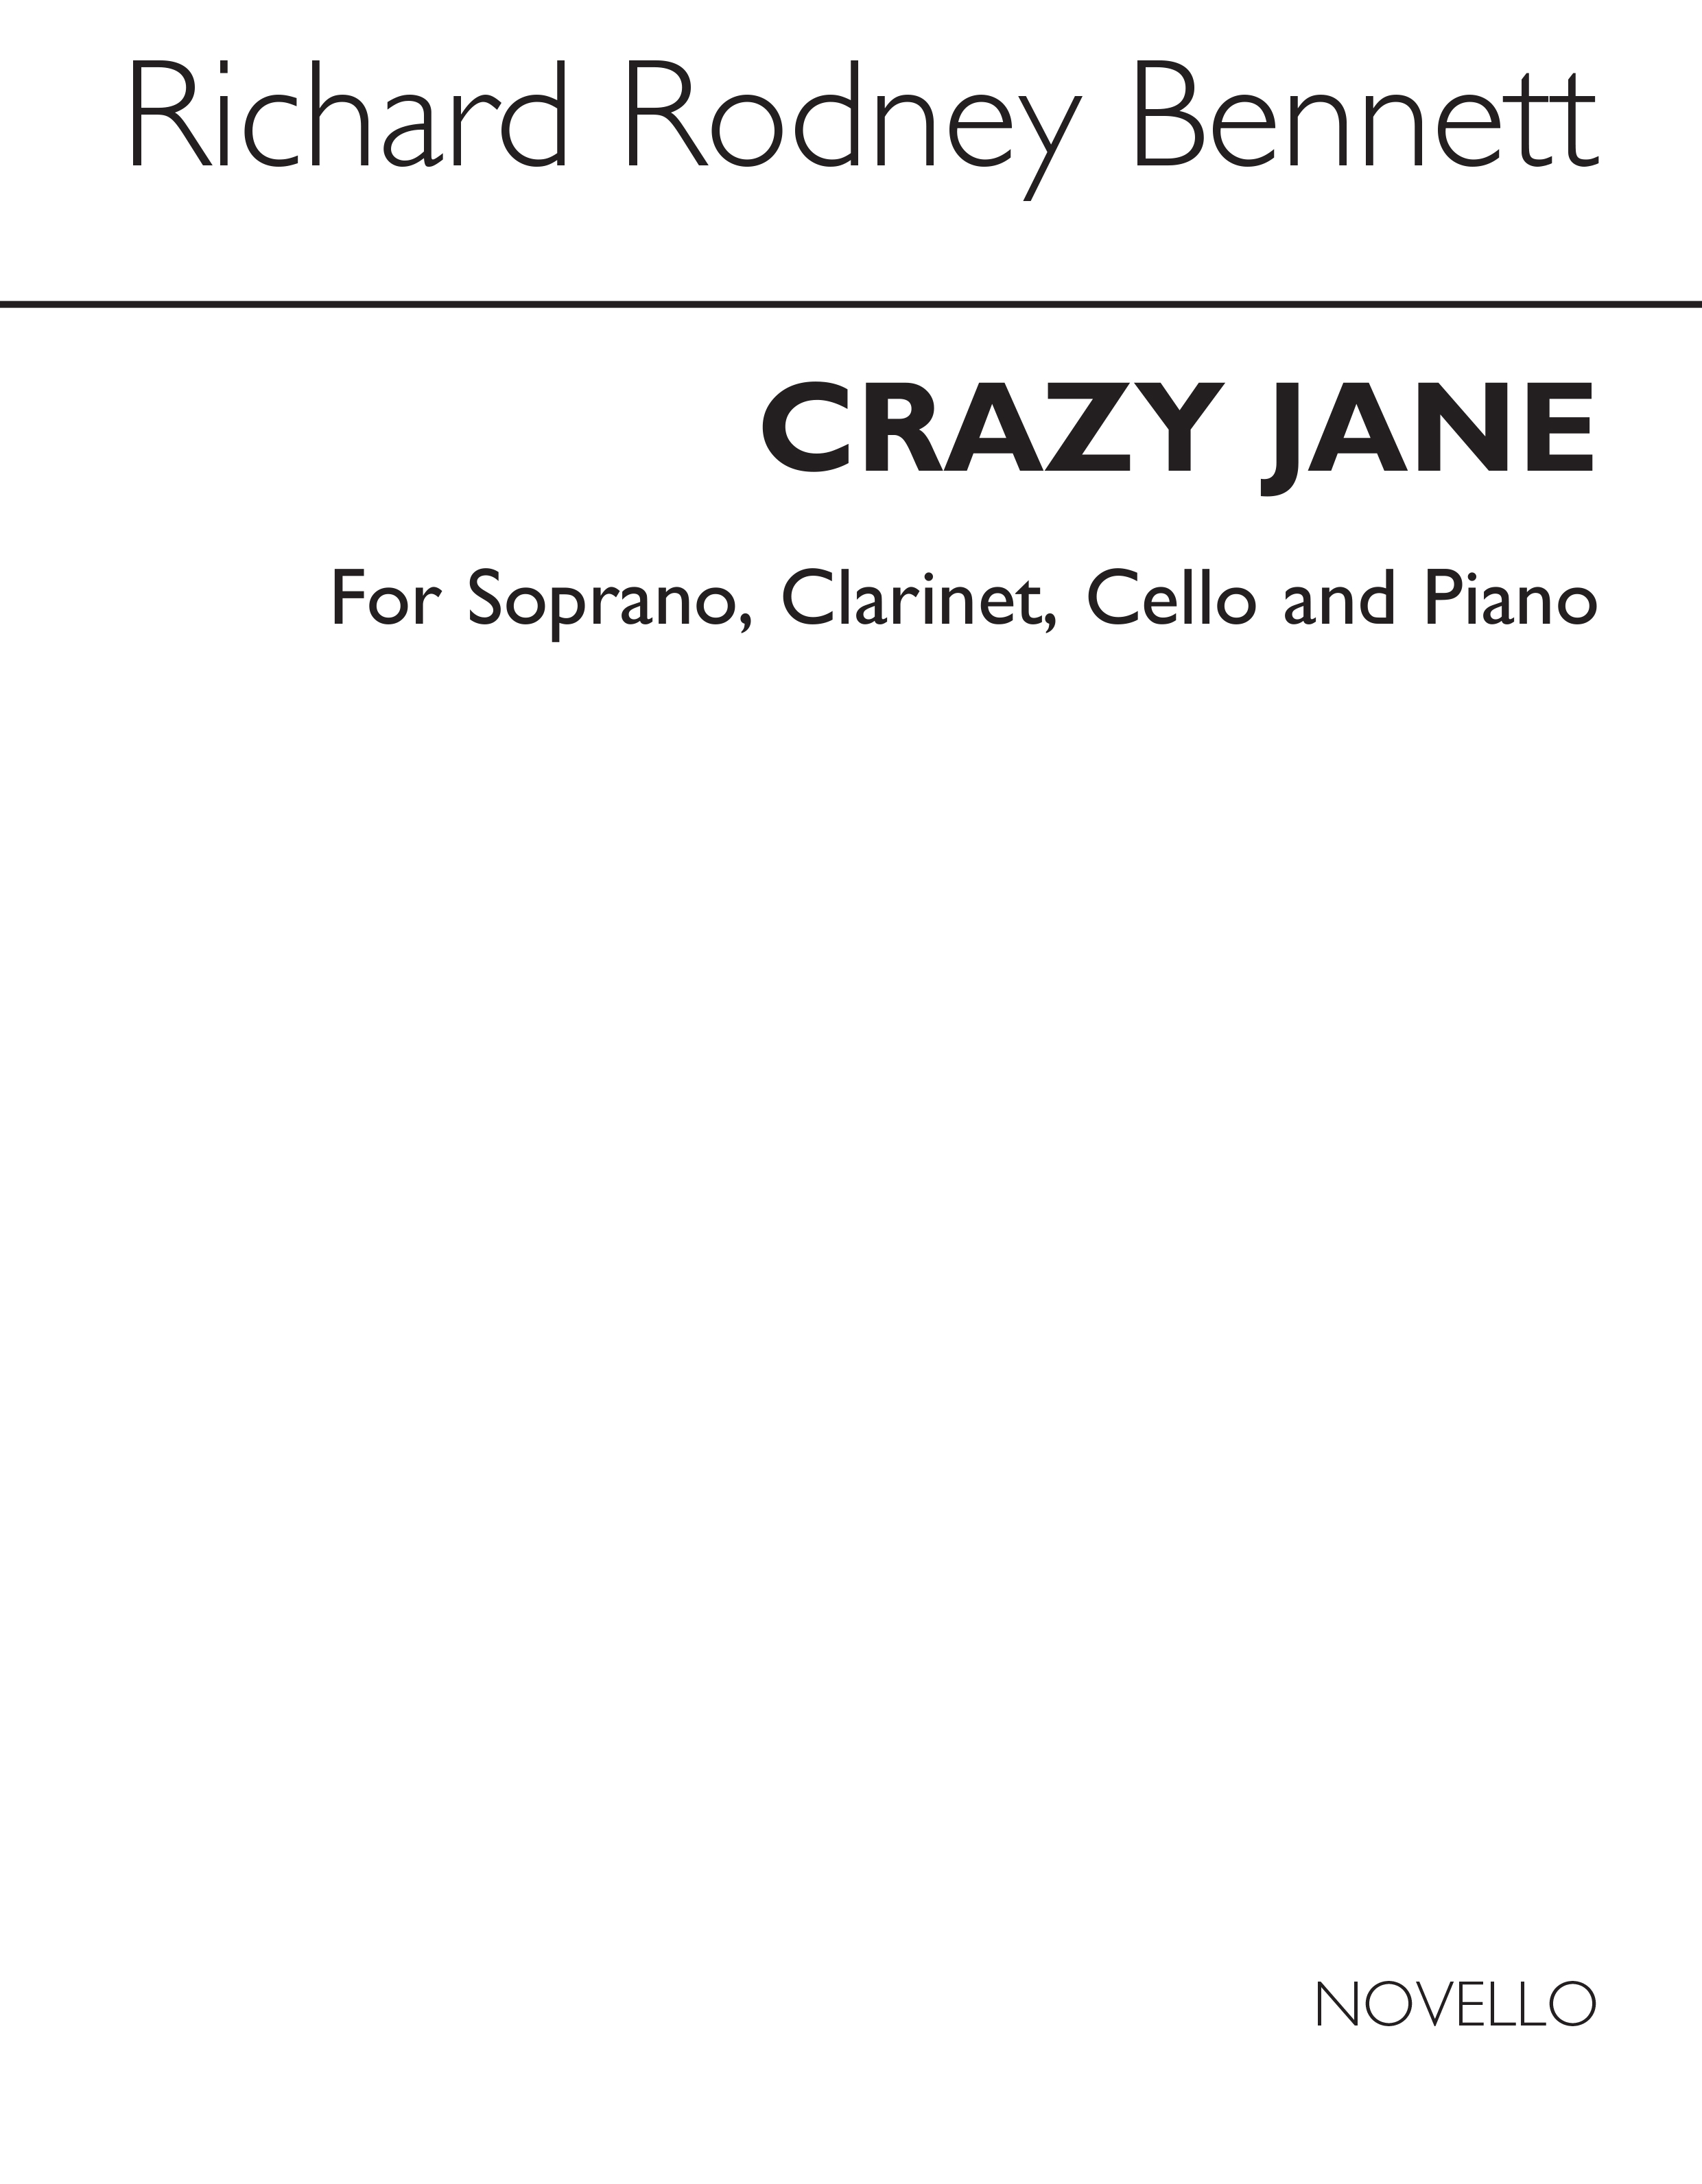 RR Bennett: Crazy Jane (Score and Parts)